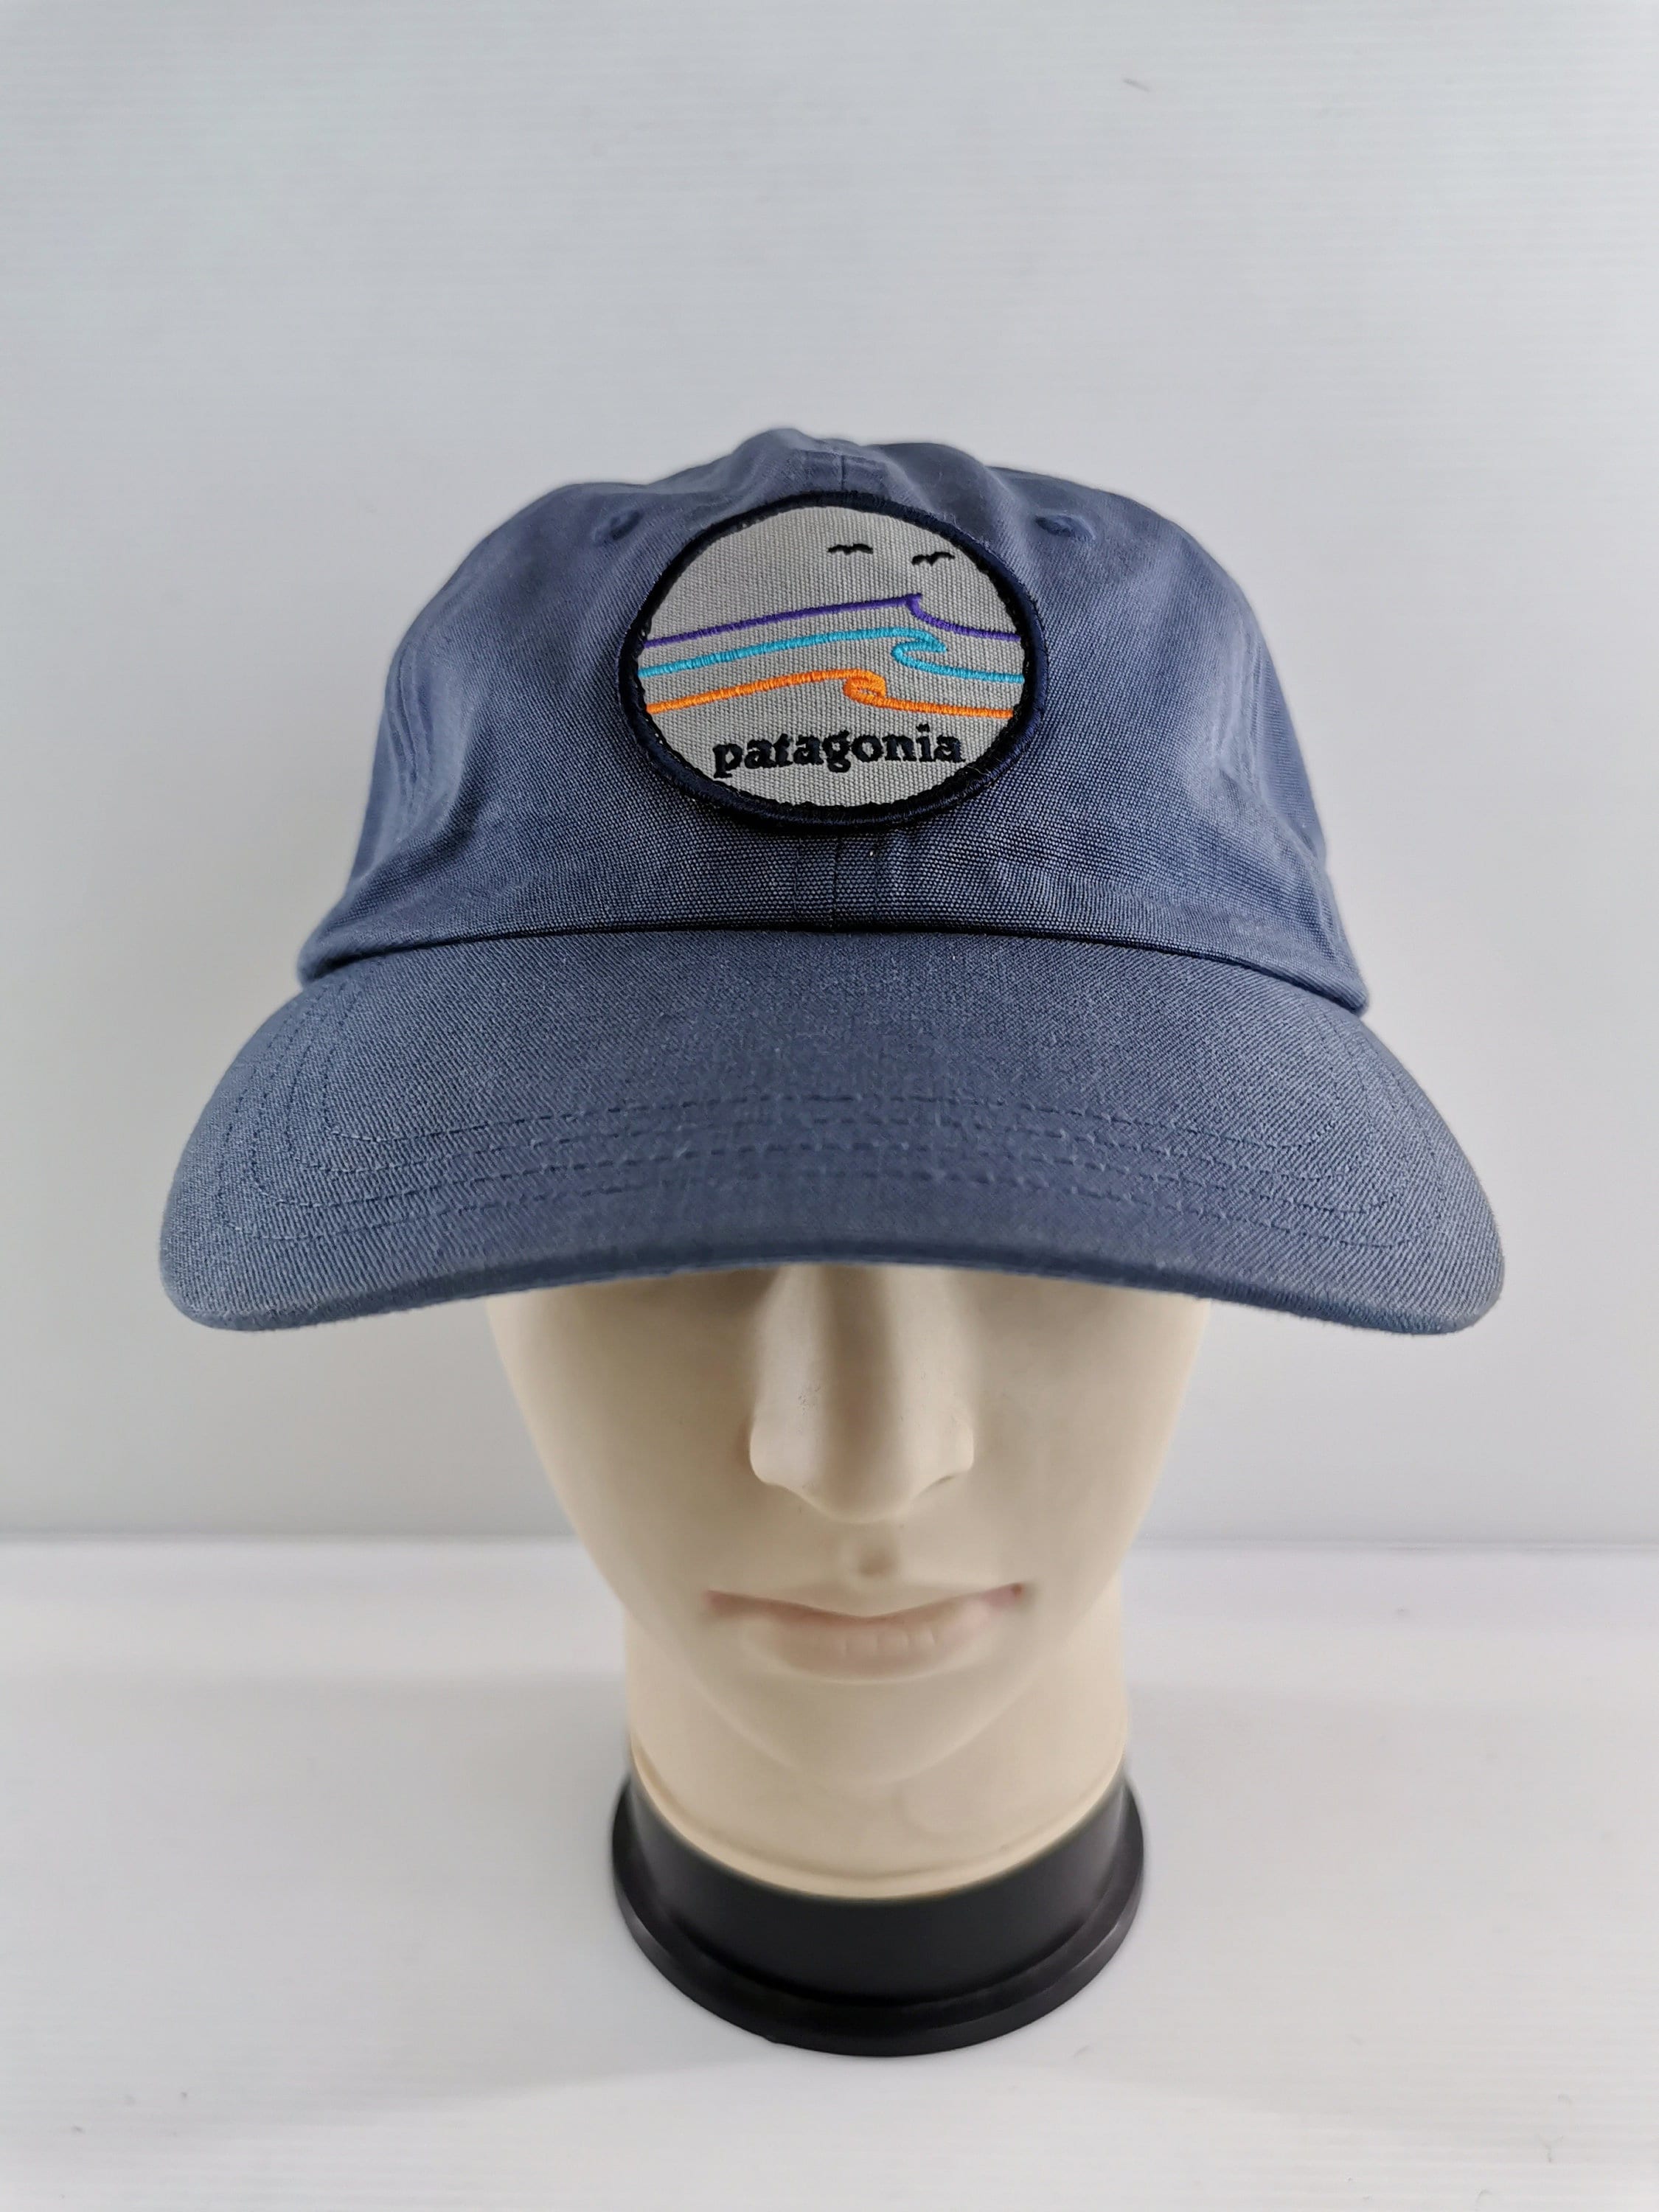 Vintage Patagonia Hat -  Canada